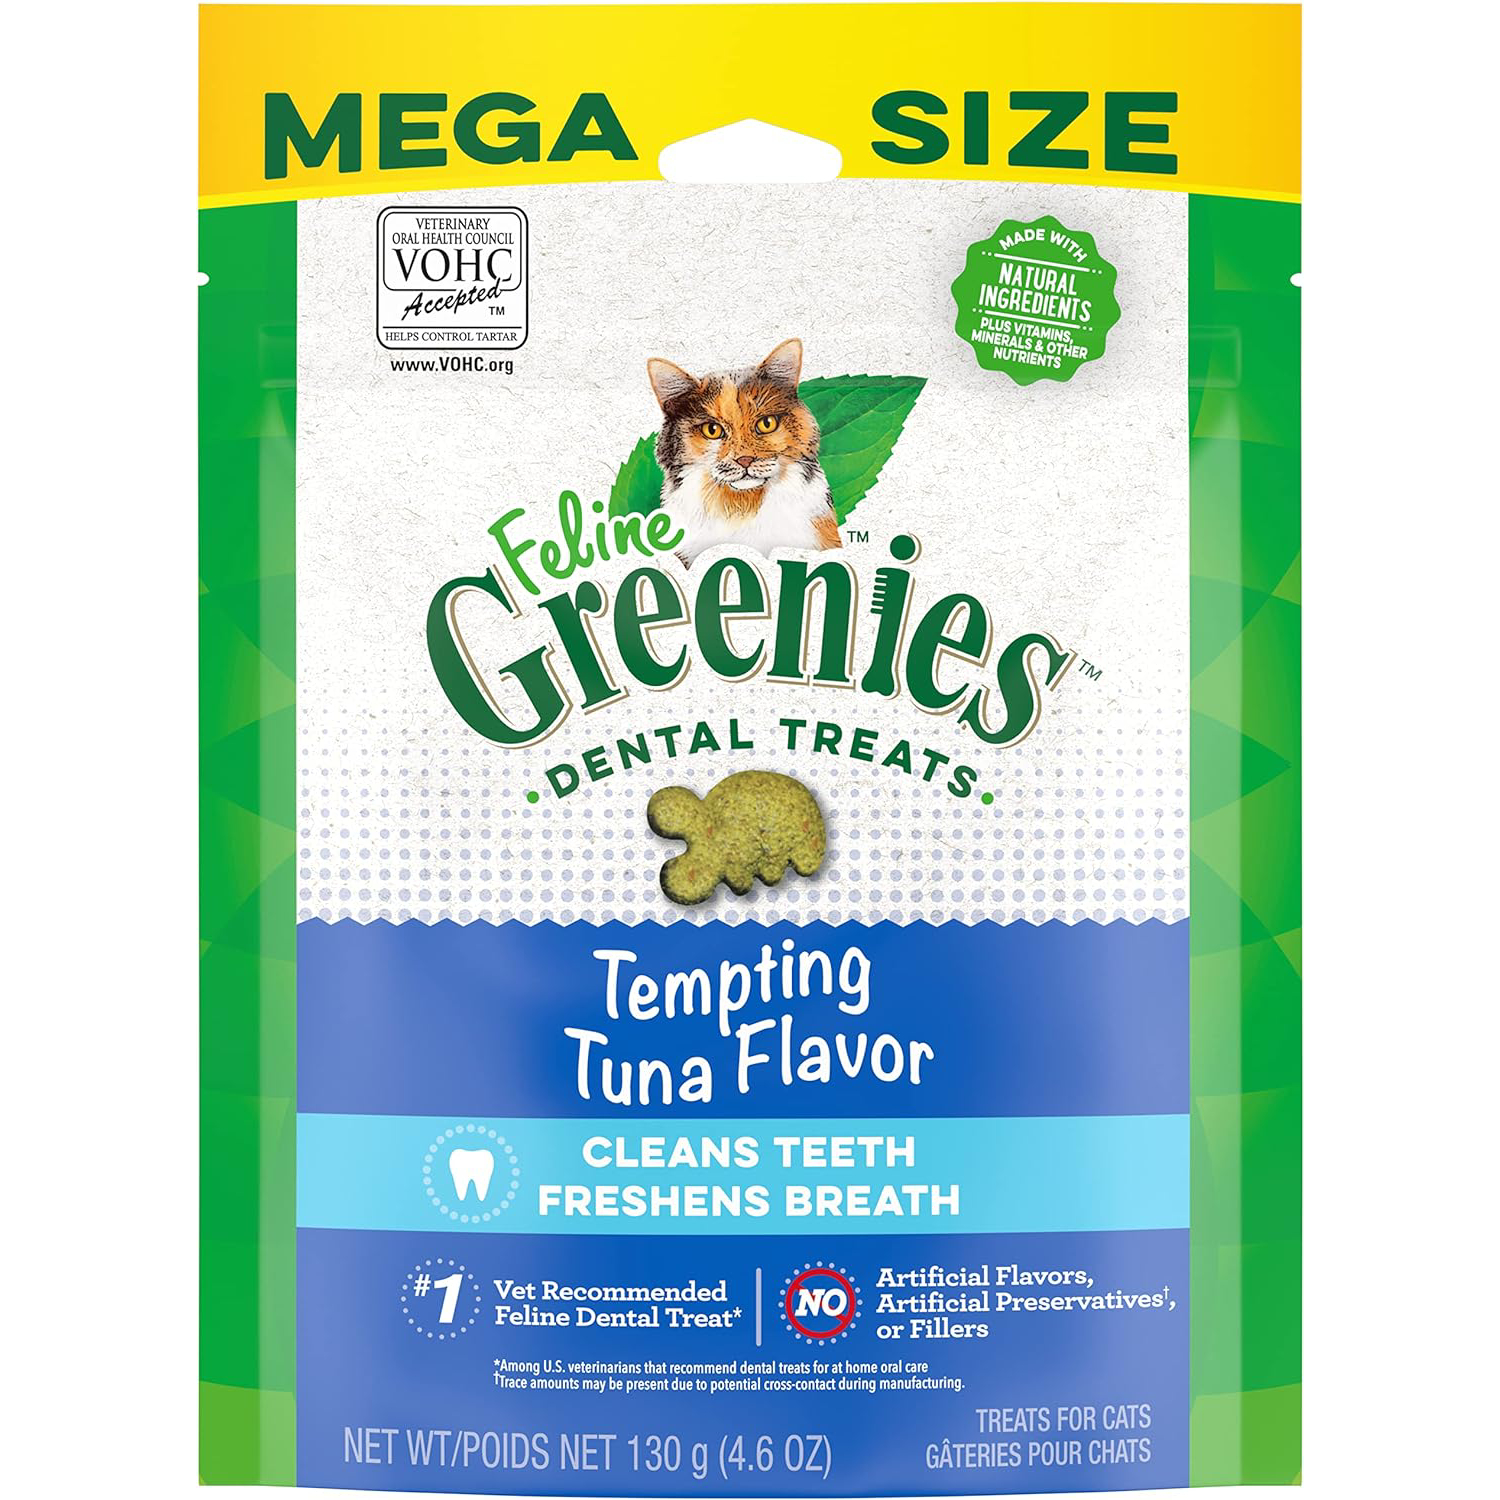 Greenies Feline Adult Natural Dental Care Cat Treats, Tempting Tuna Flavor, 4.6 oz. Pouch new